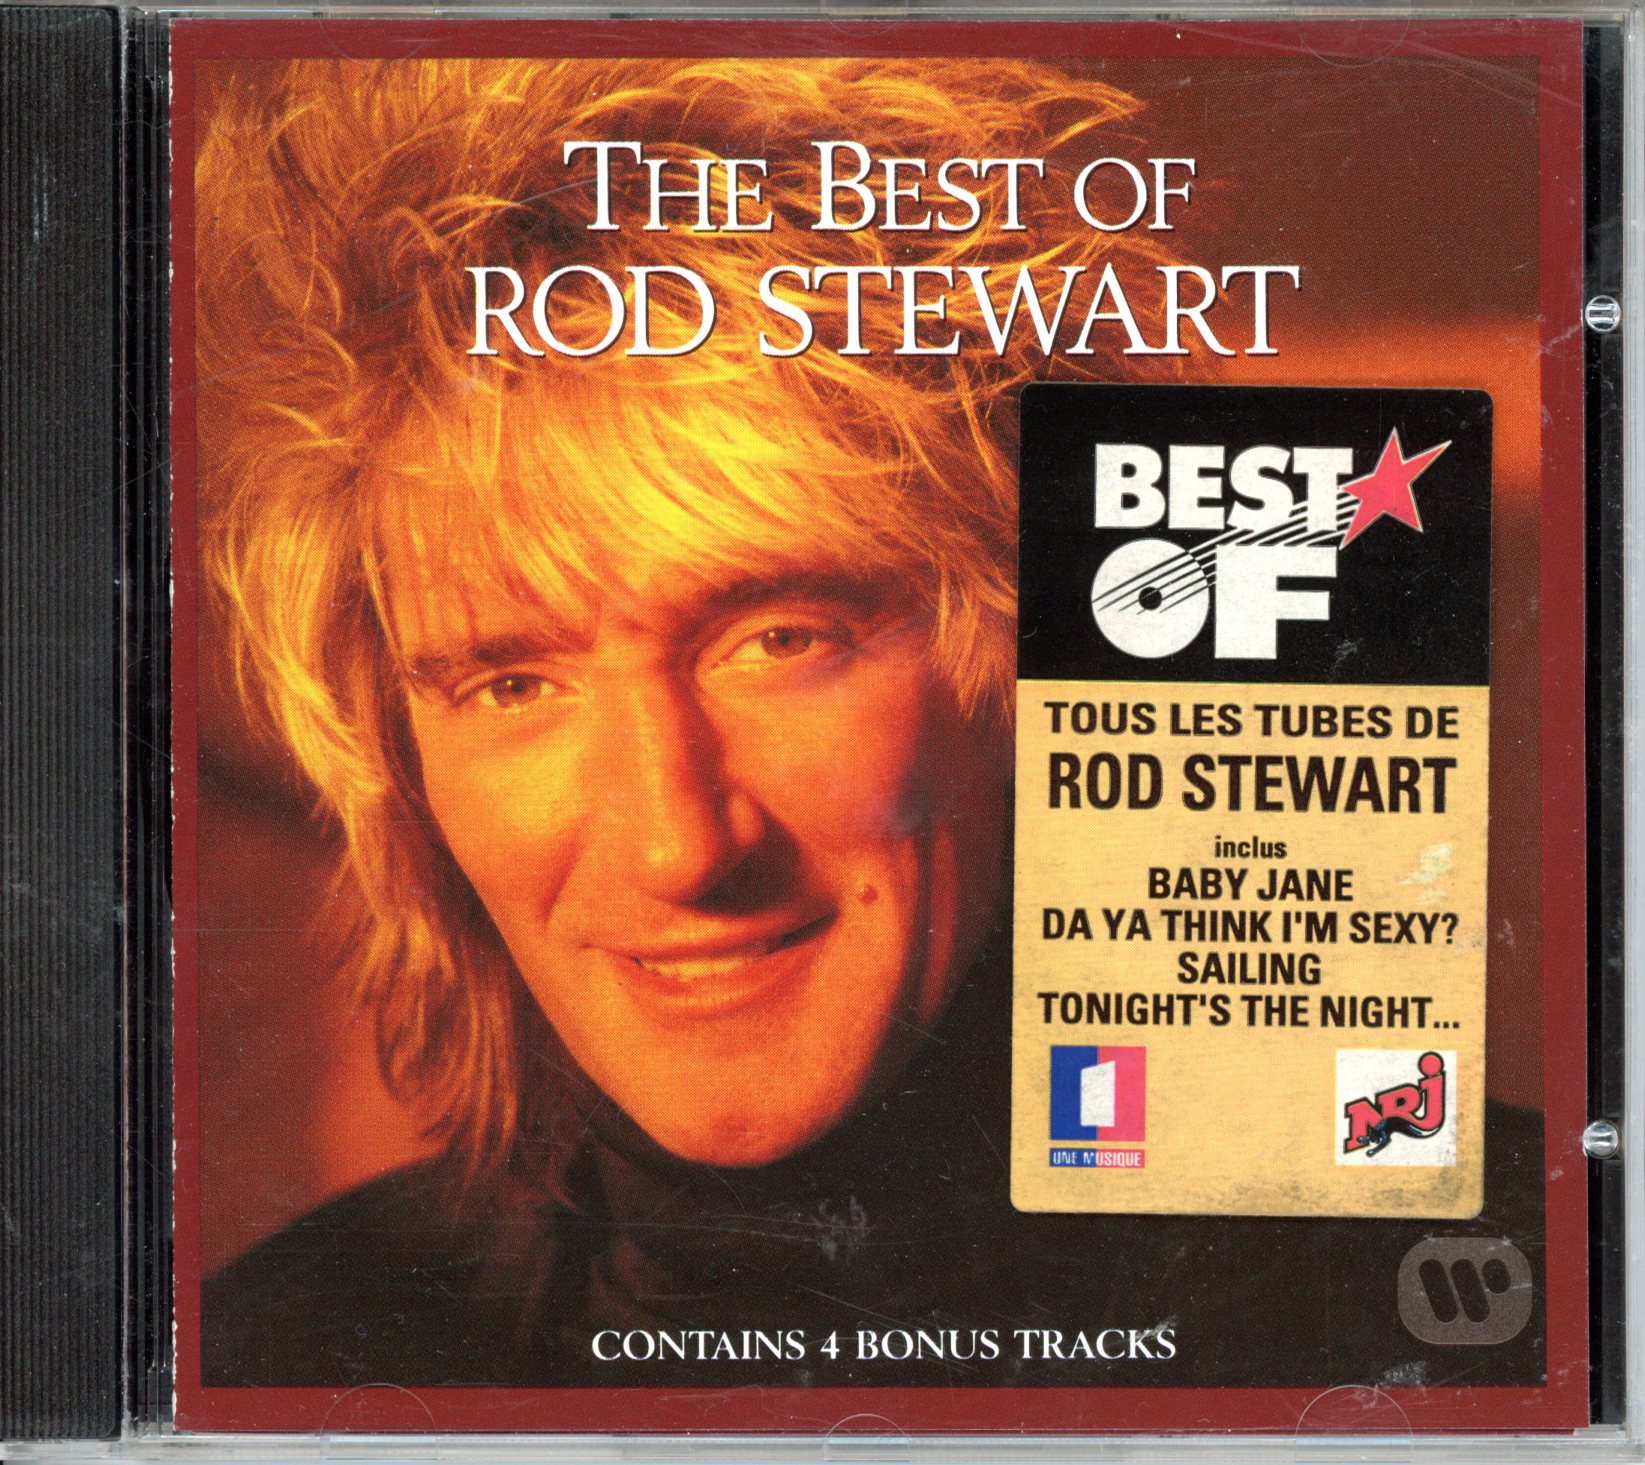 ROD STEWART THE BEST OF 1989 LEMASTERBROCKERS